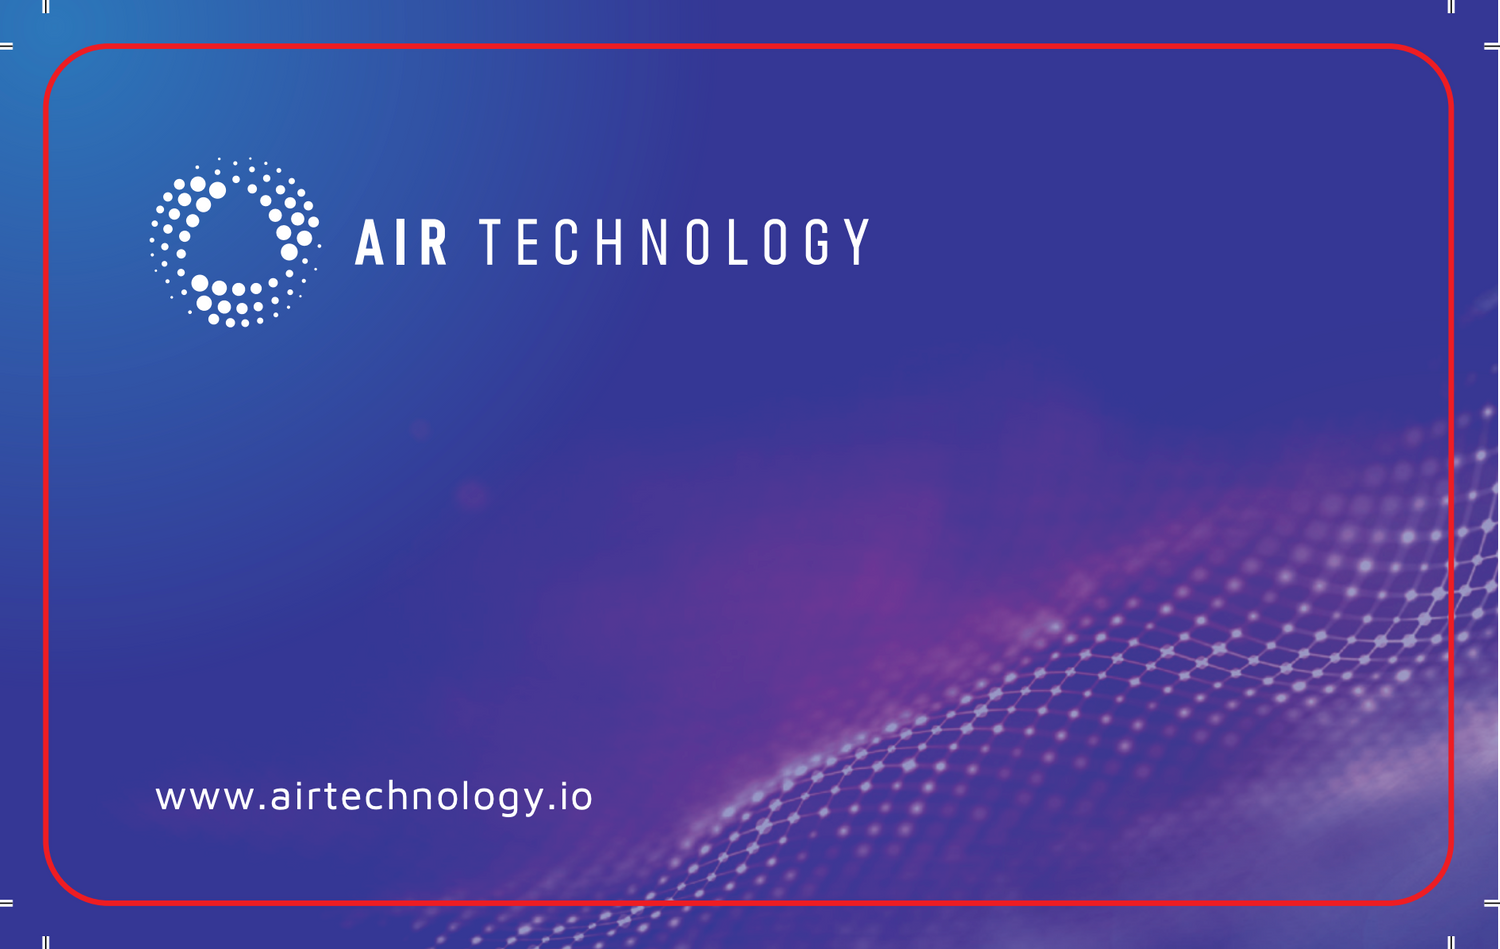 Air Technology